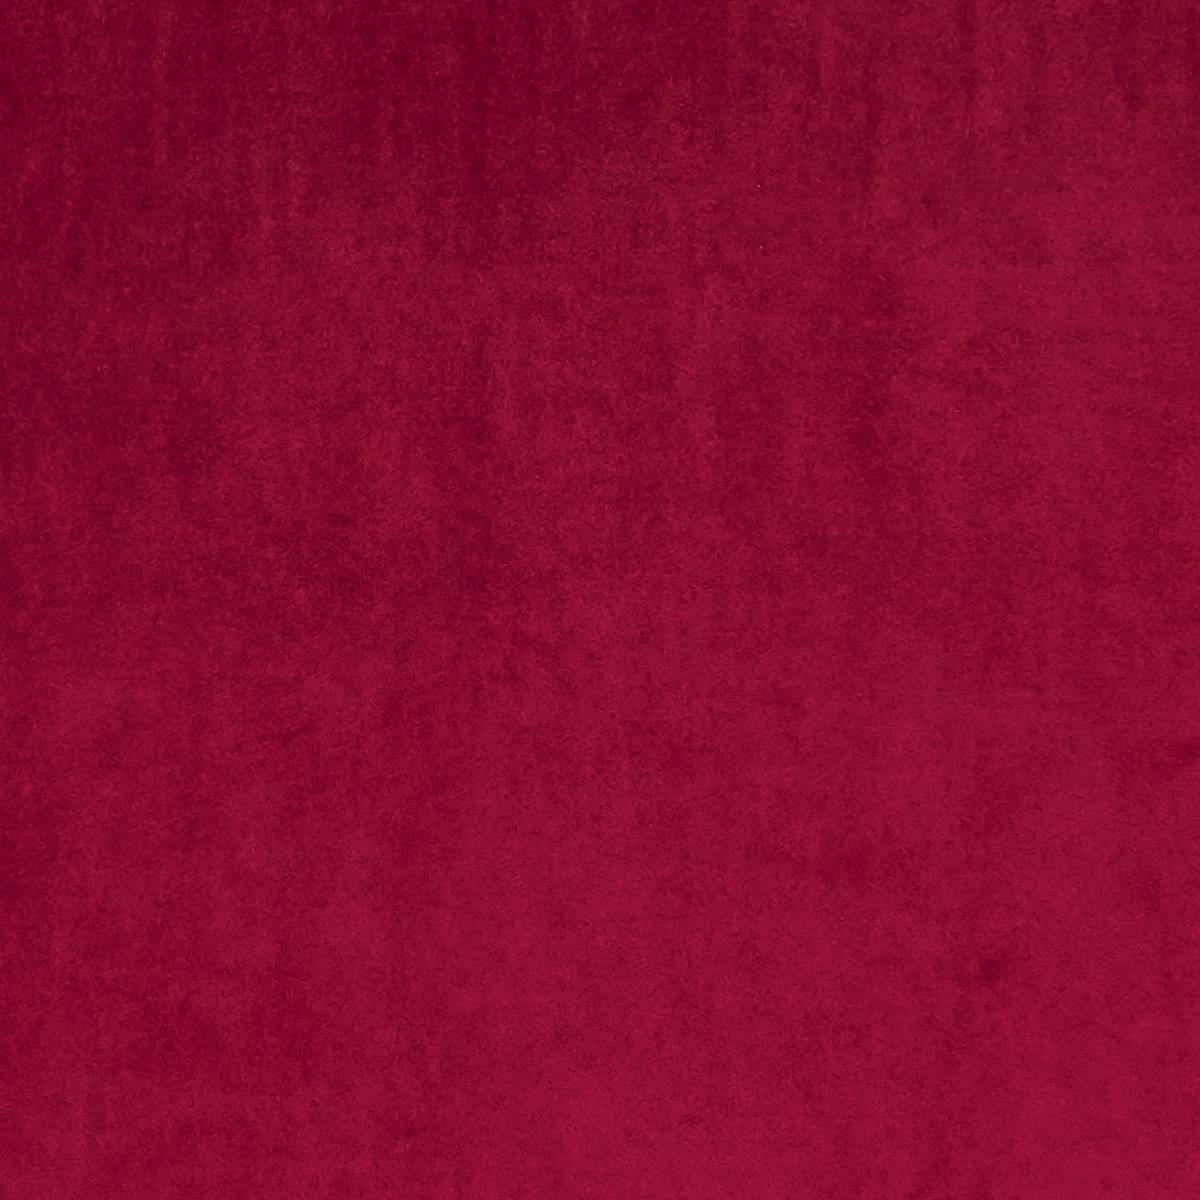 Murano Scarlet Fabric by Studio G